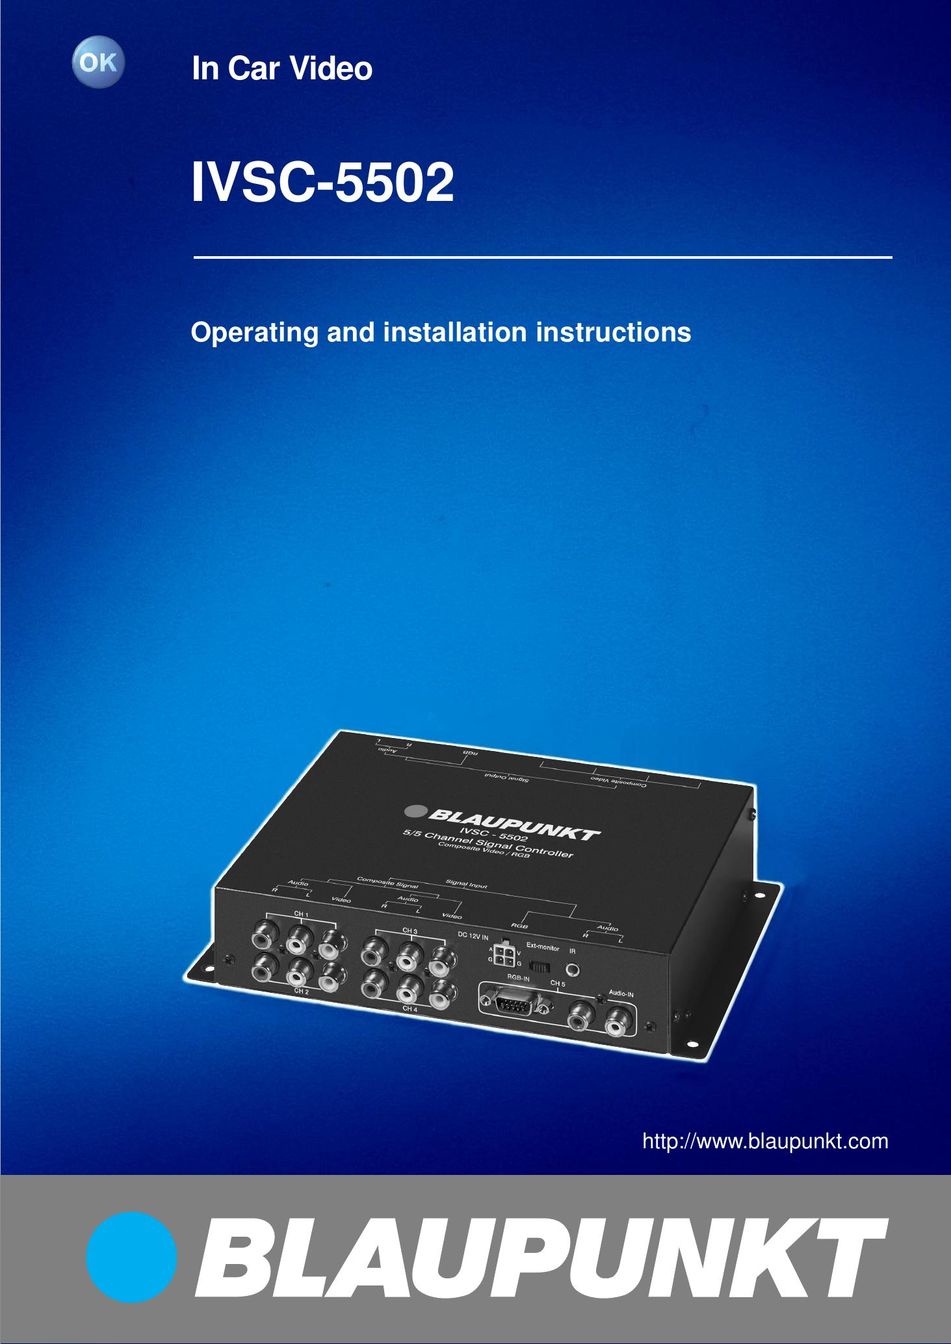 Blaupunkt IVSC-5502 Car Video System User Manual